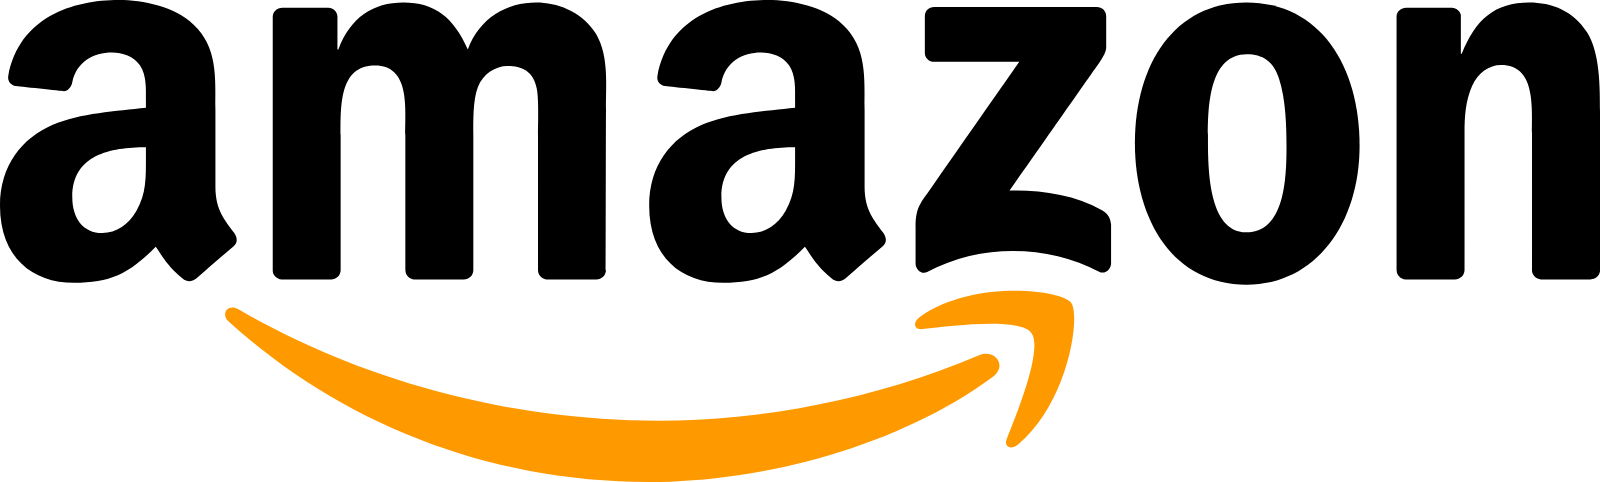 Amazon it companies in Srinagar